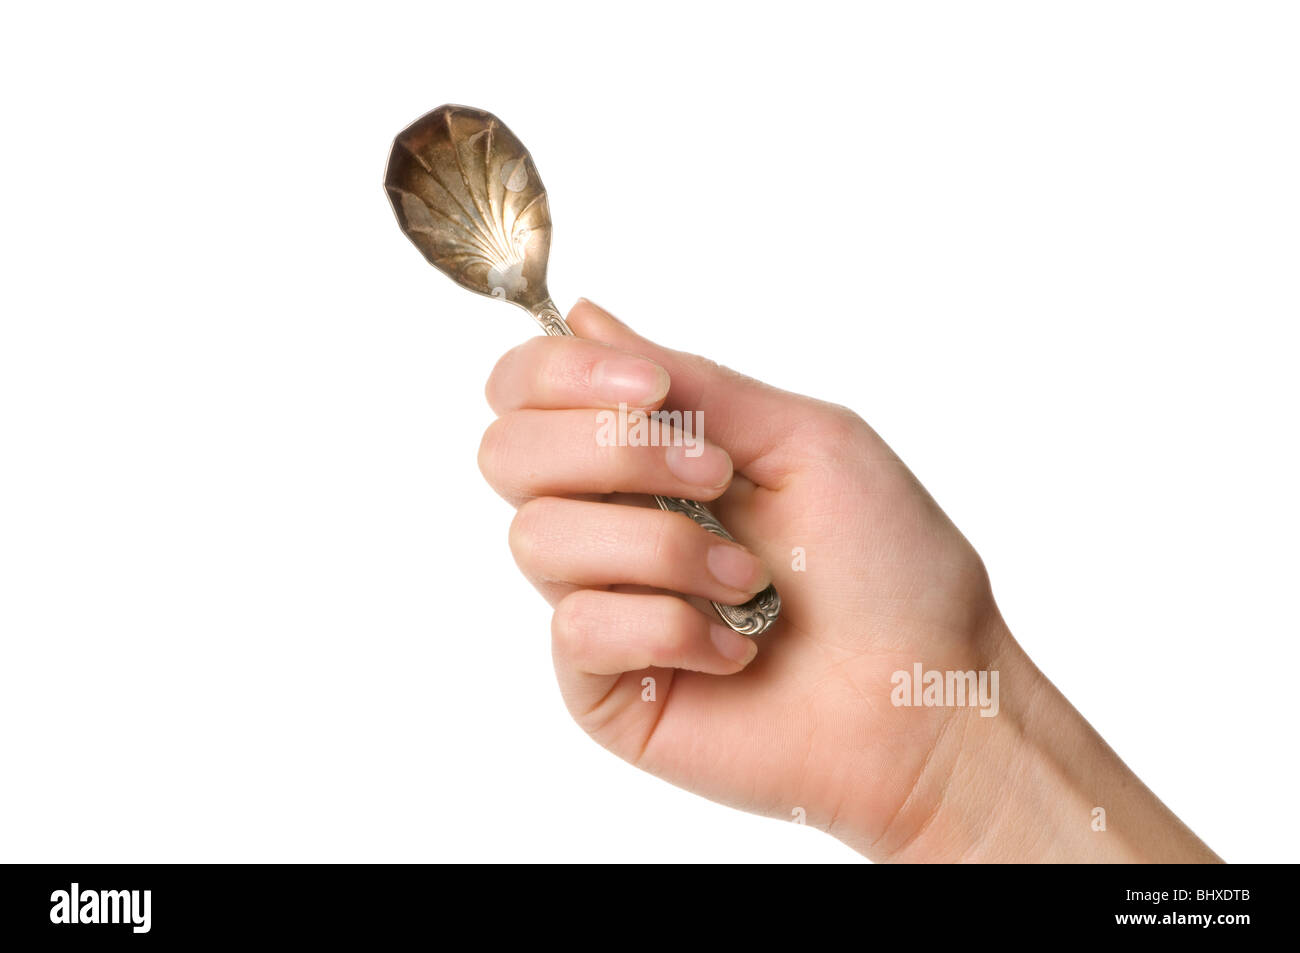 hand holding spoon Stock Photo